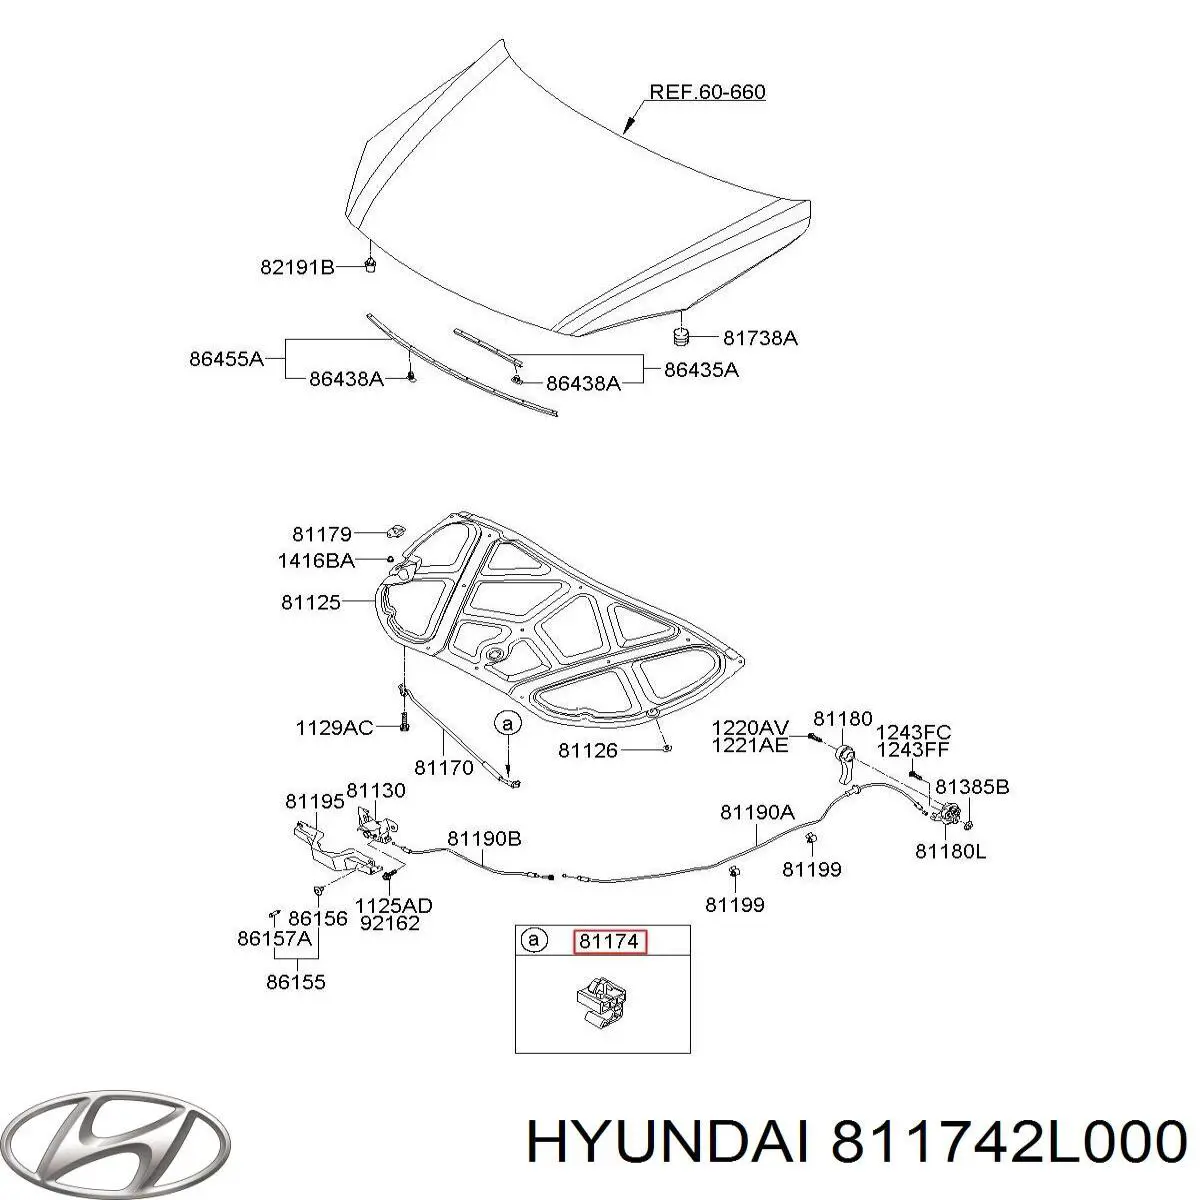 811742L000 Hyundai/Kia capo de bloqueo